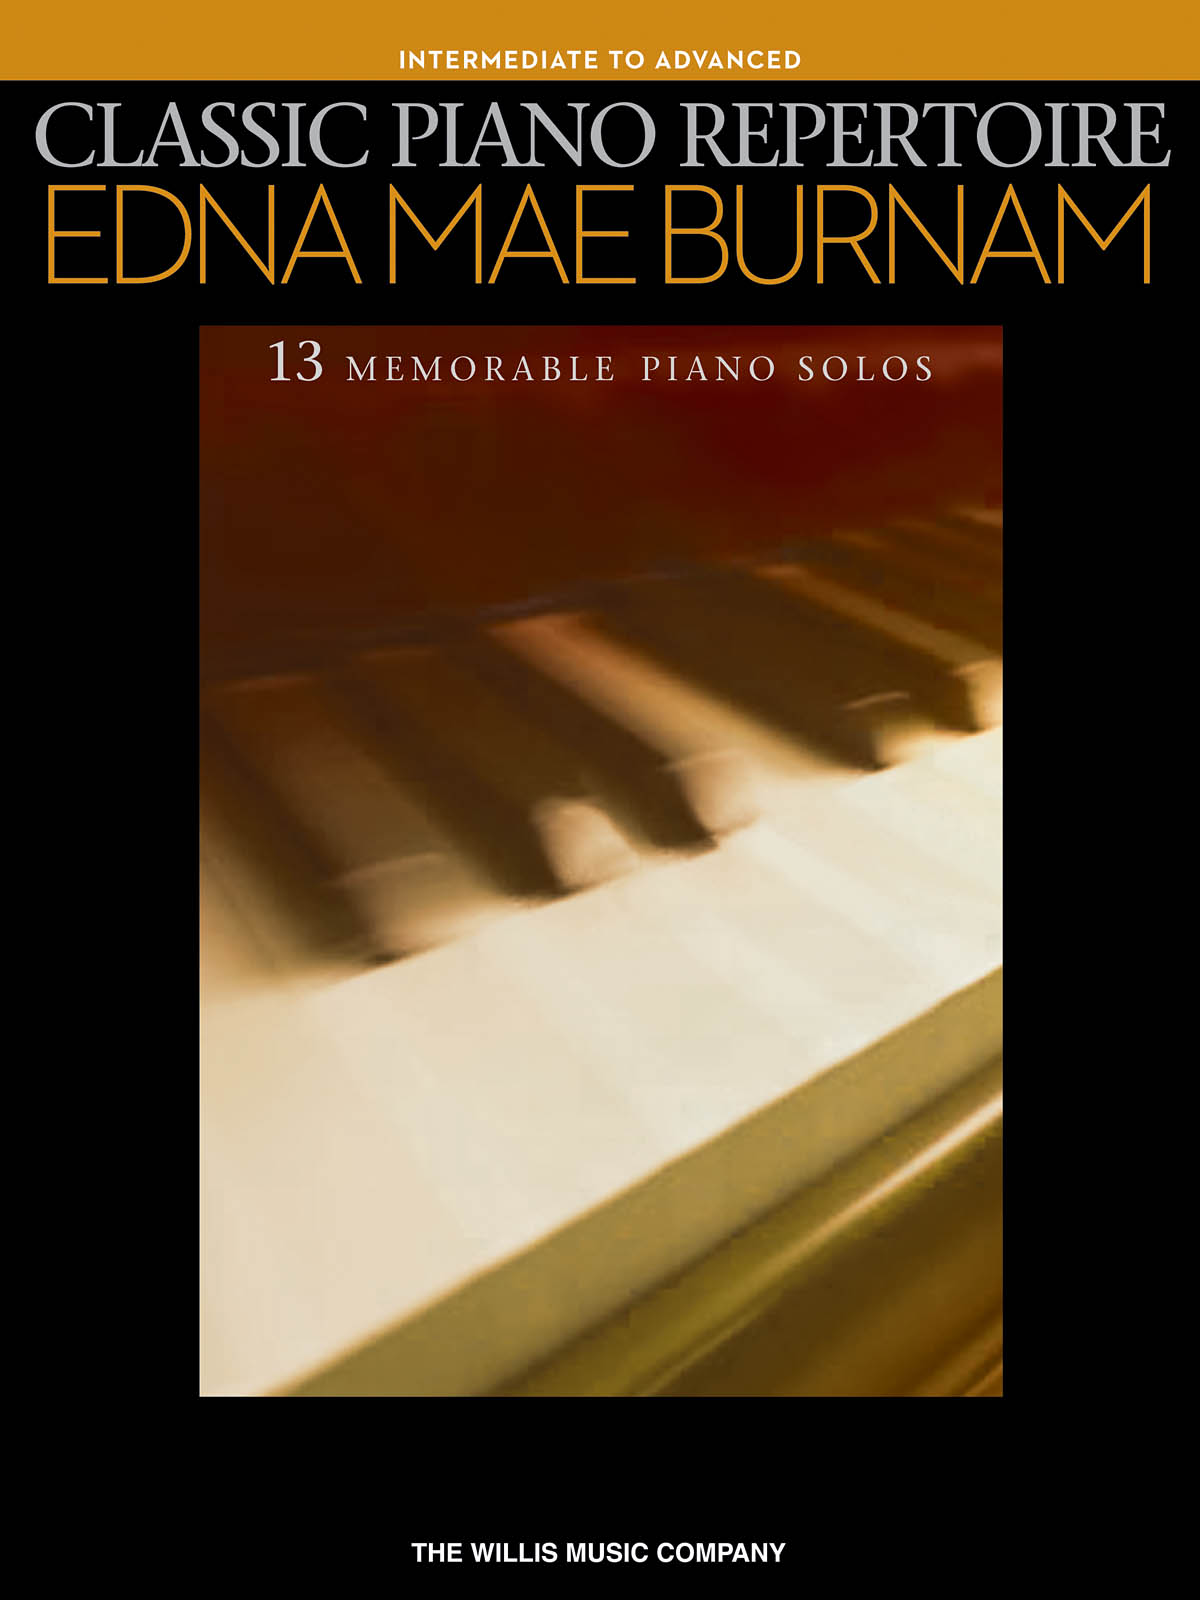 Edna-Mae Burnam: Classic Piano Repertoire: Piano: Instrumental Album